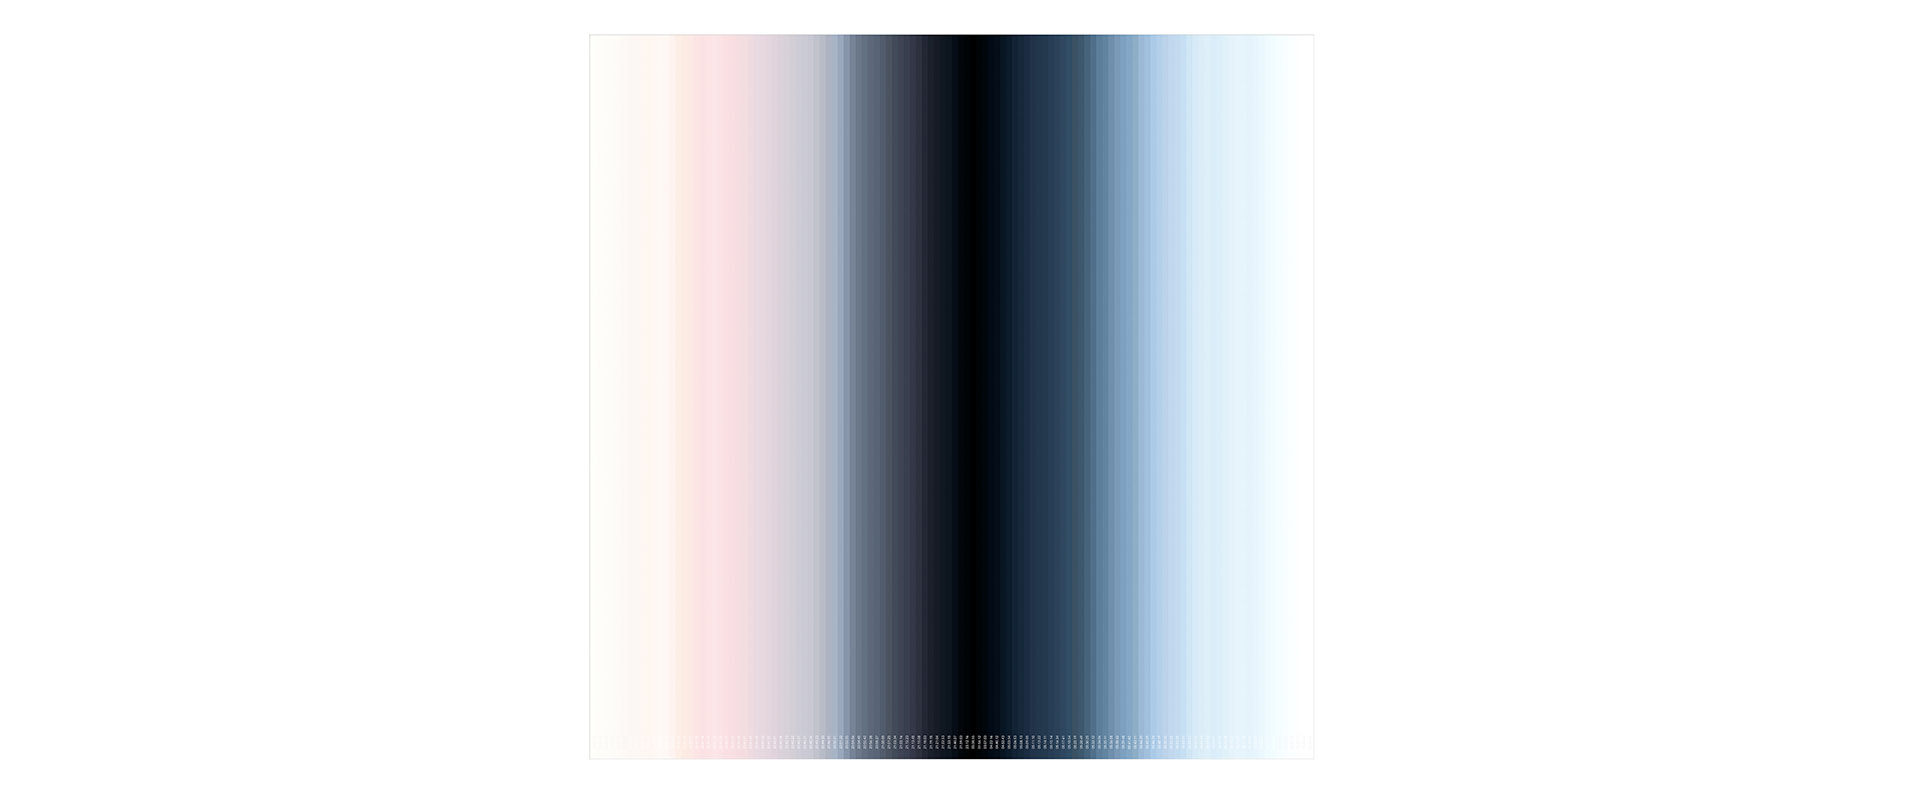 sommer licht weiss 2013/44 – 2013, 30.6./1.7.2013 – 20:31:57 – 06:46:26 Fujicolor Crystal Archive auf Aluminium, Acrylglas, 3 Ex., 120 x 120 cm